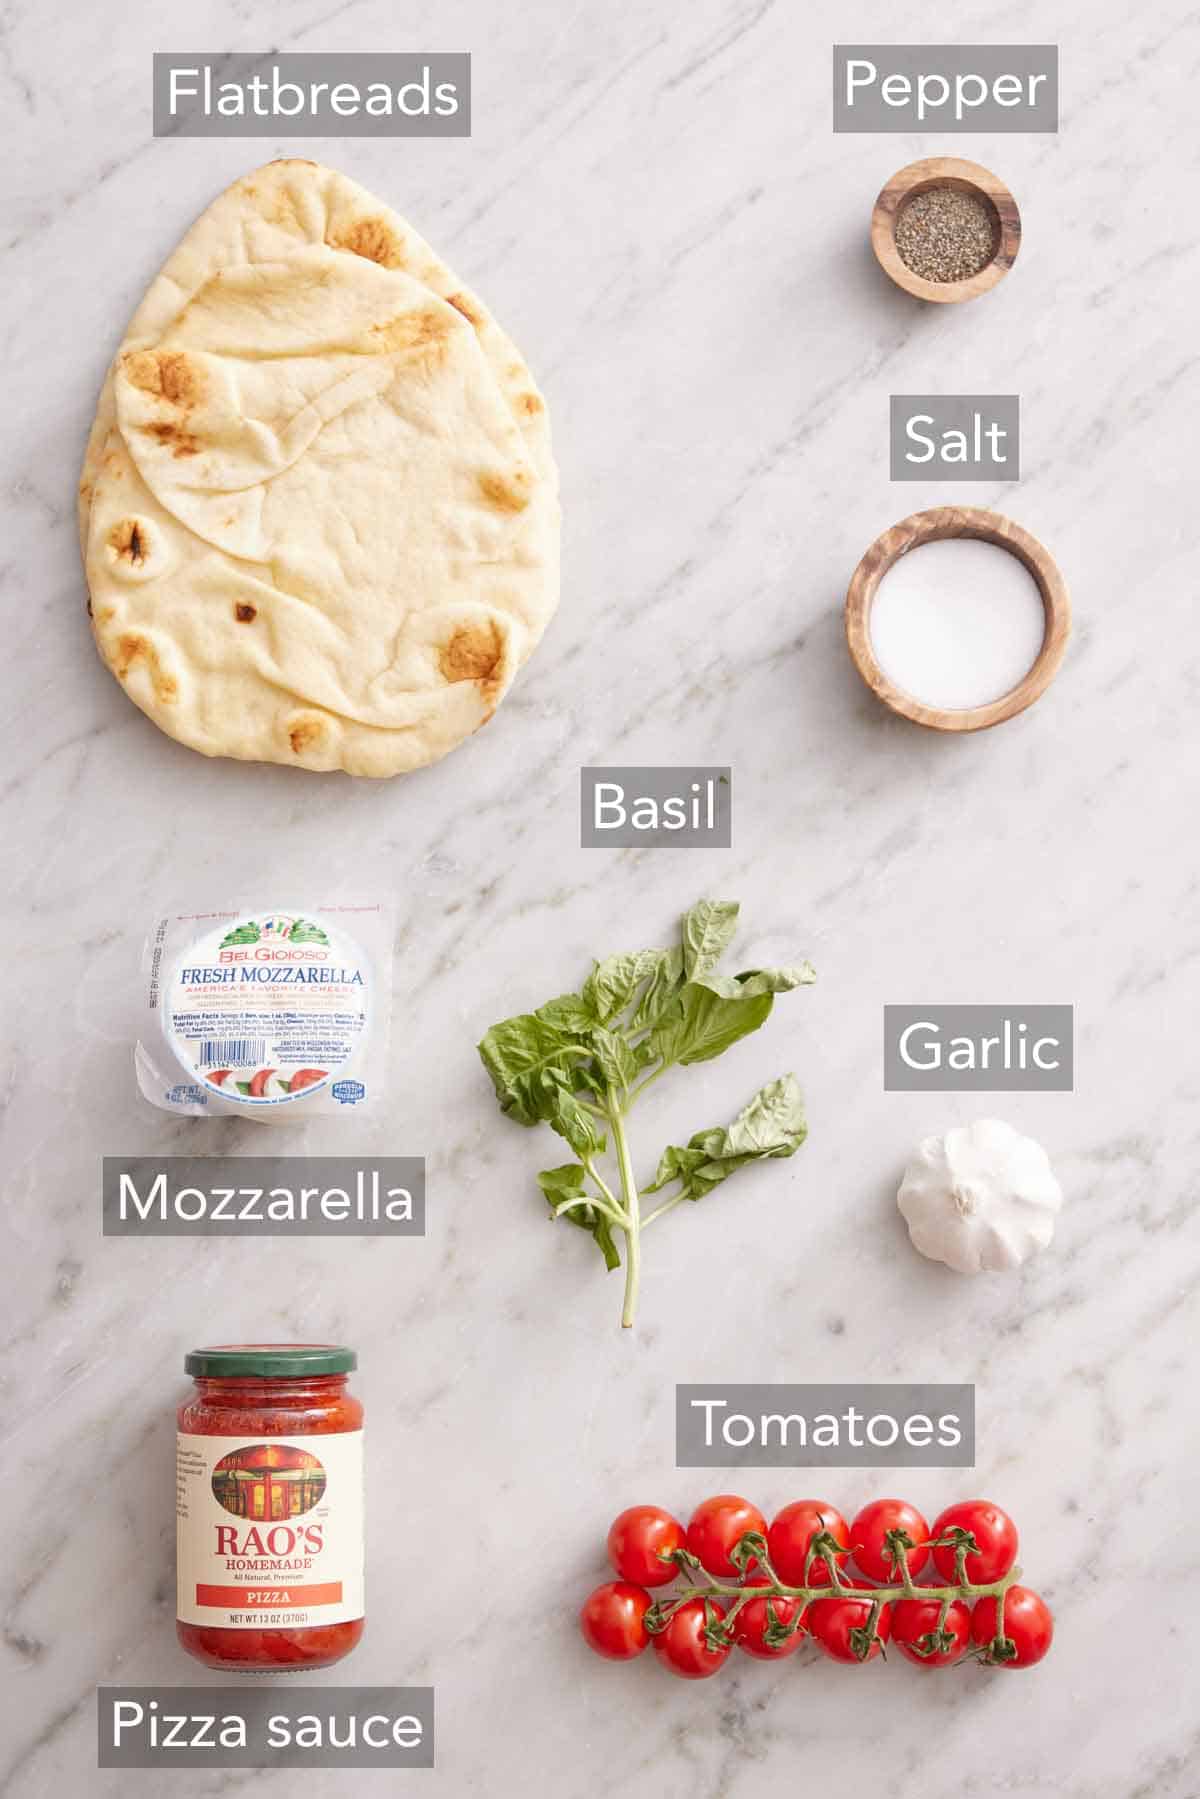 Ingredients needed to make flatbread pizza.